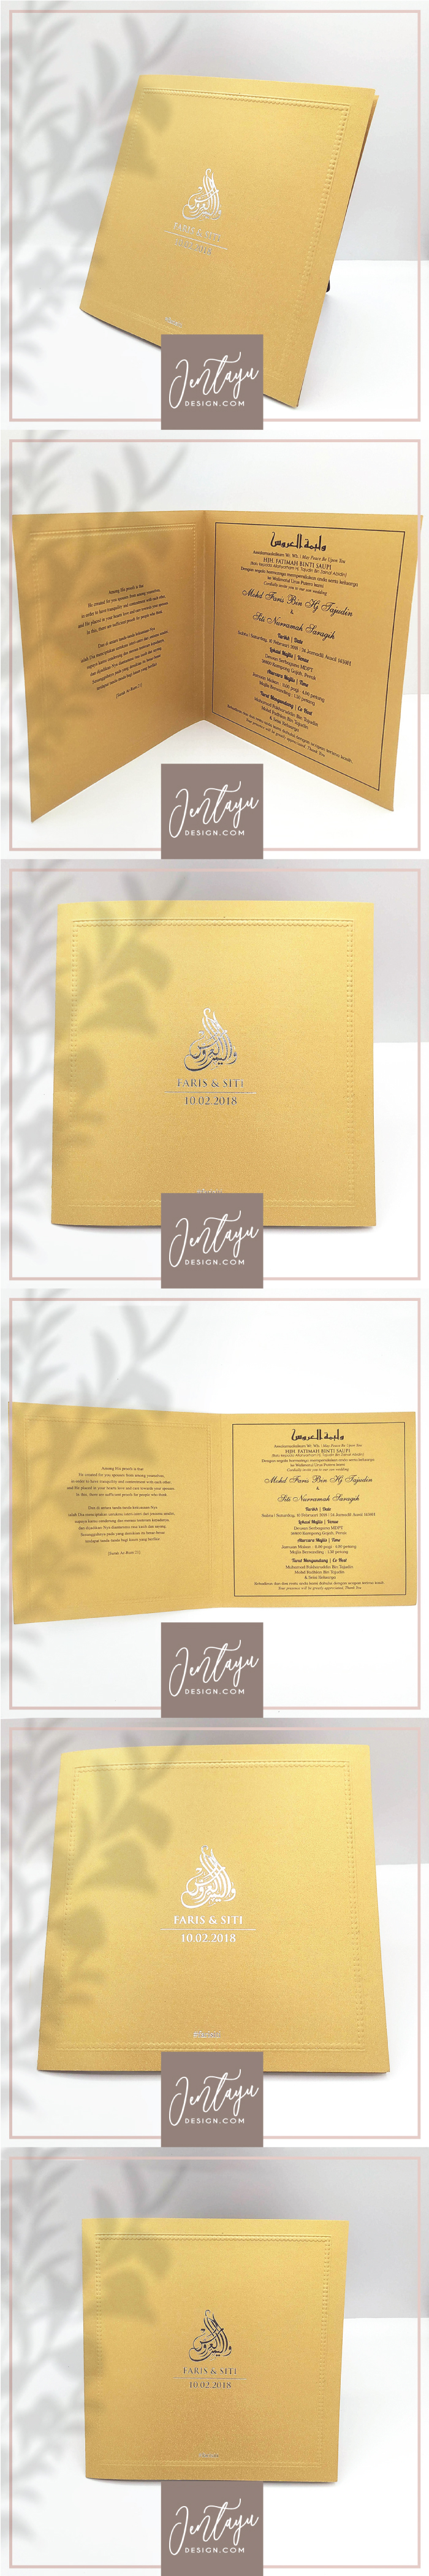 jentayu design kad kahwin formal vip royal berlipat metallic folded wedding cards square 6x6